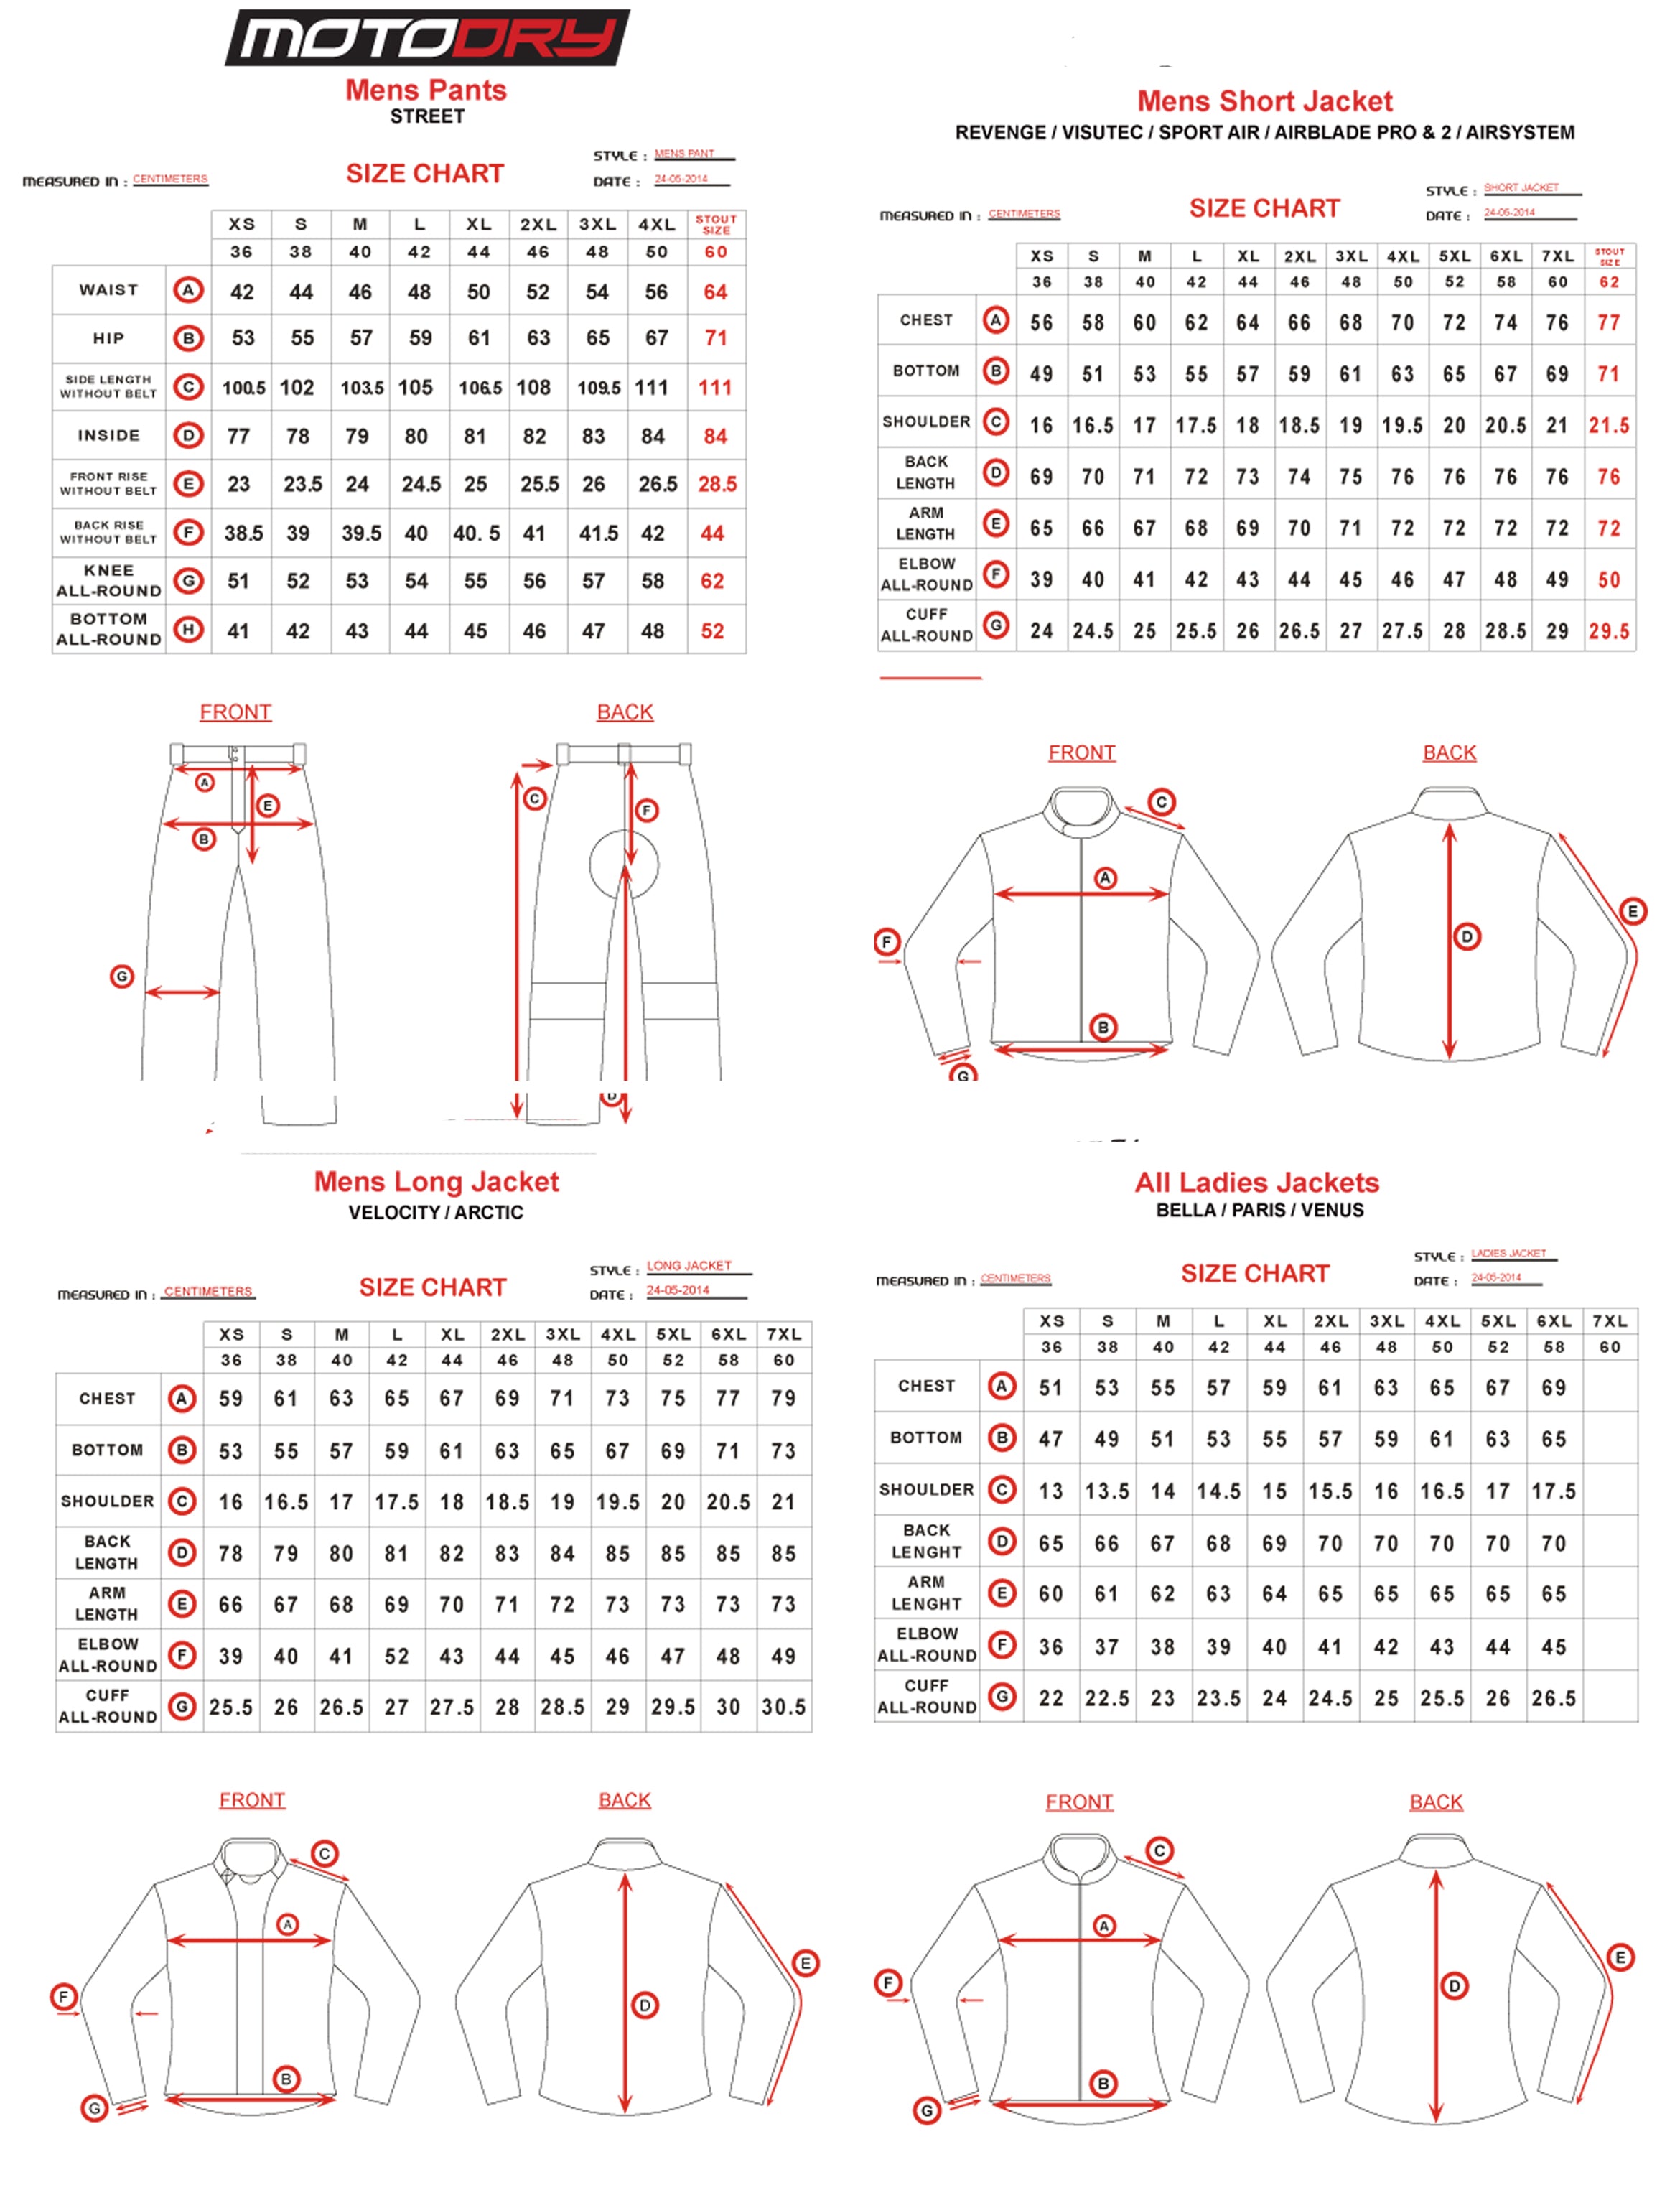 Moto Dry - Rallye Adventure Pants Size Guide